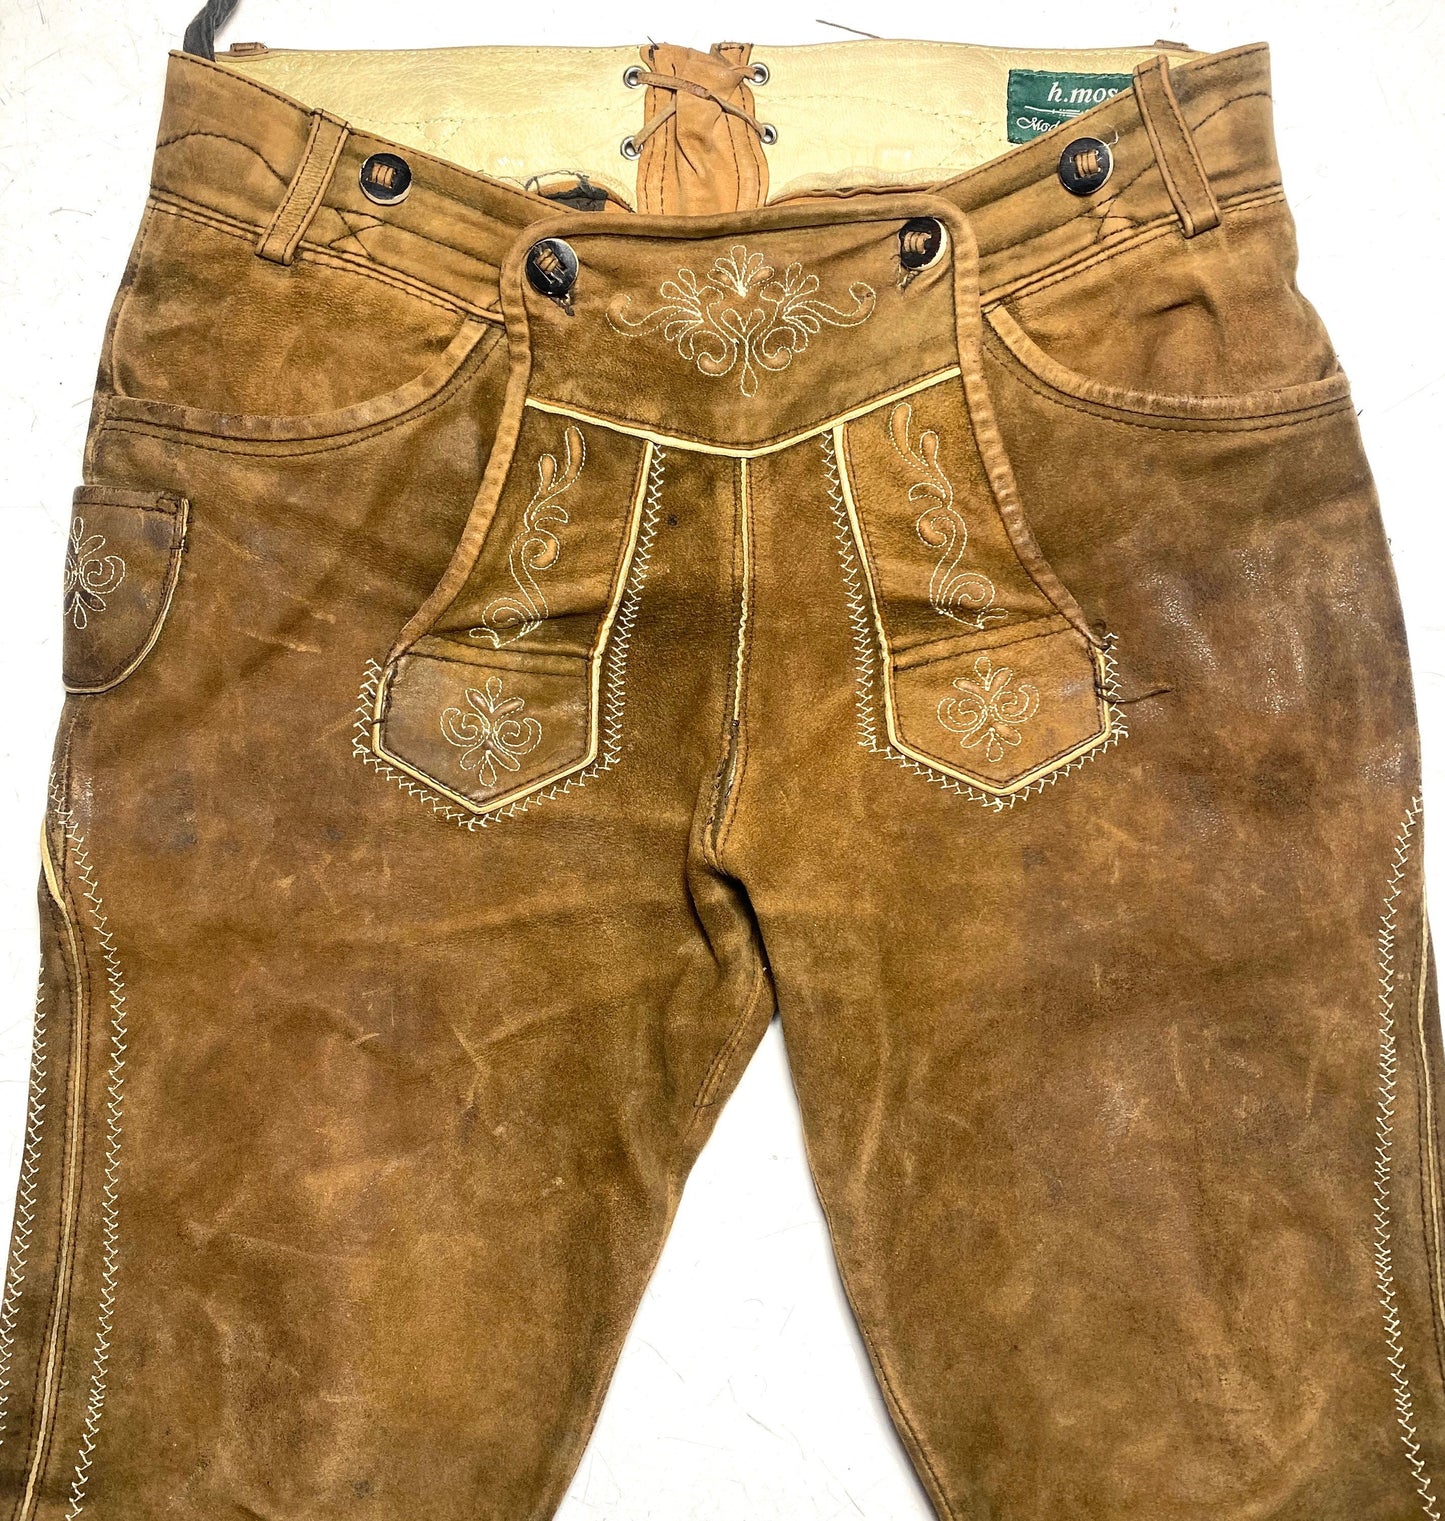 H.Moser trachten leather trousers, traditional German / Tiroler oktoberfest style alpen shorts, size 44